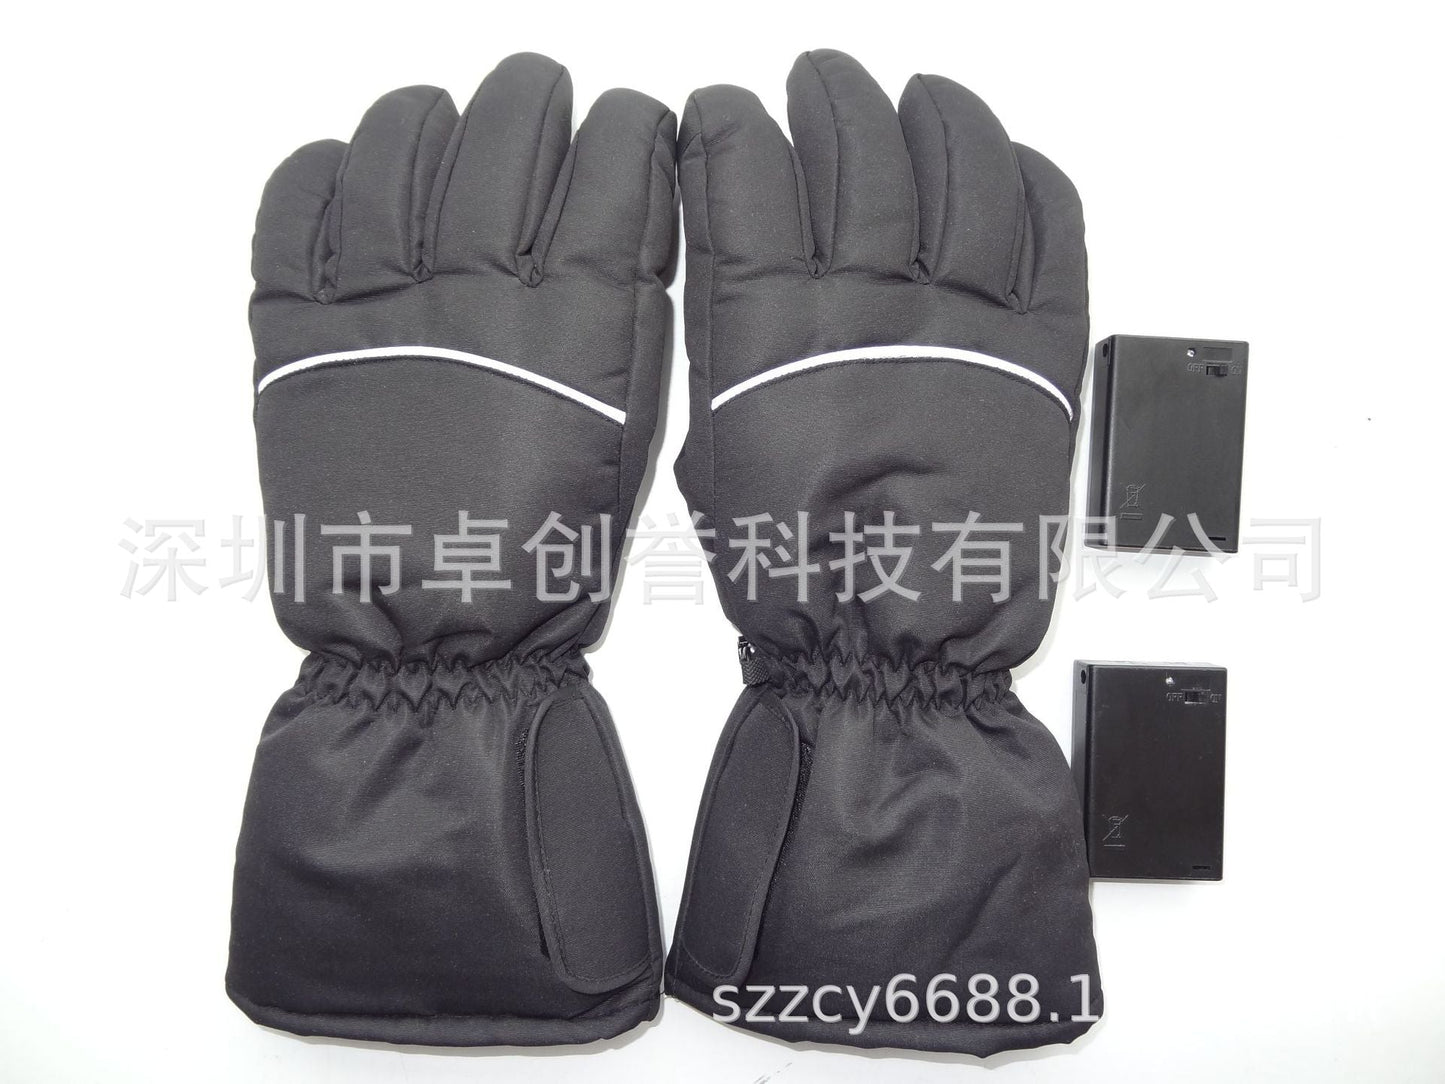 Waterproof Heated Outdoor Gloves Warm Quick Heating Battery Powered Black